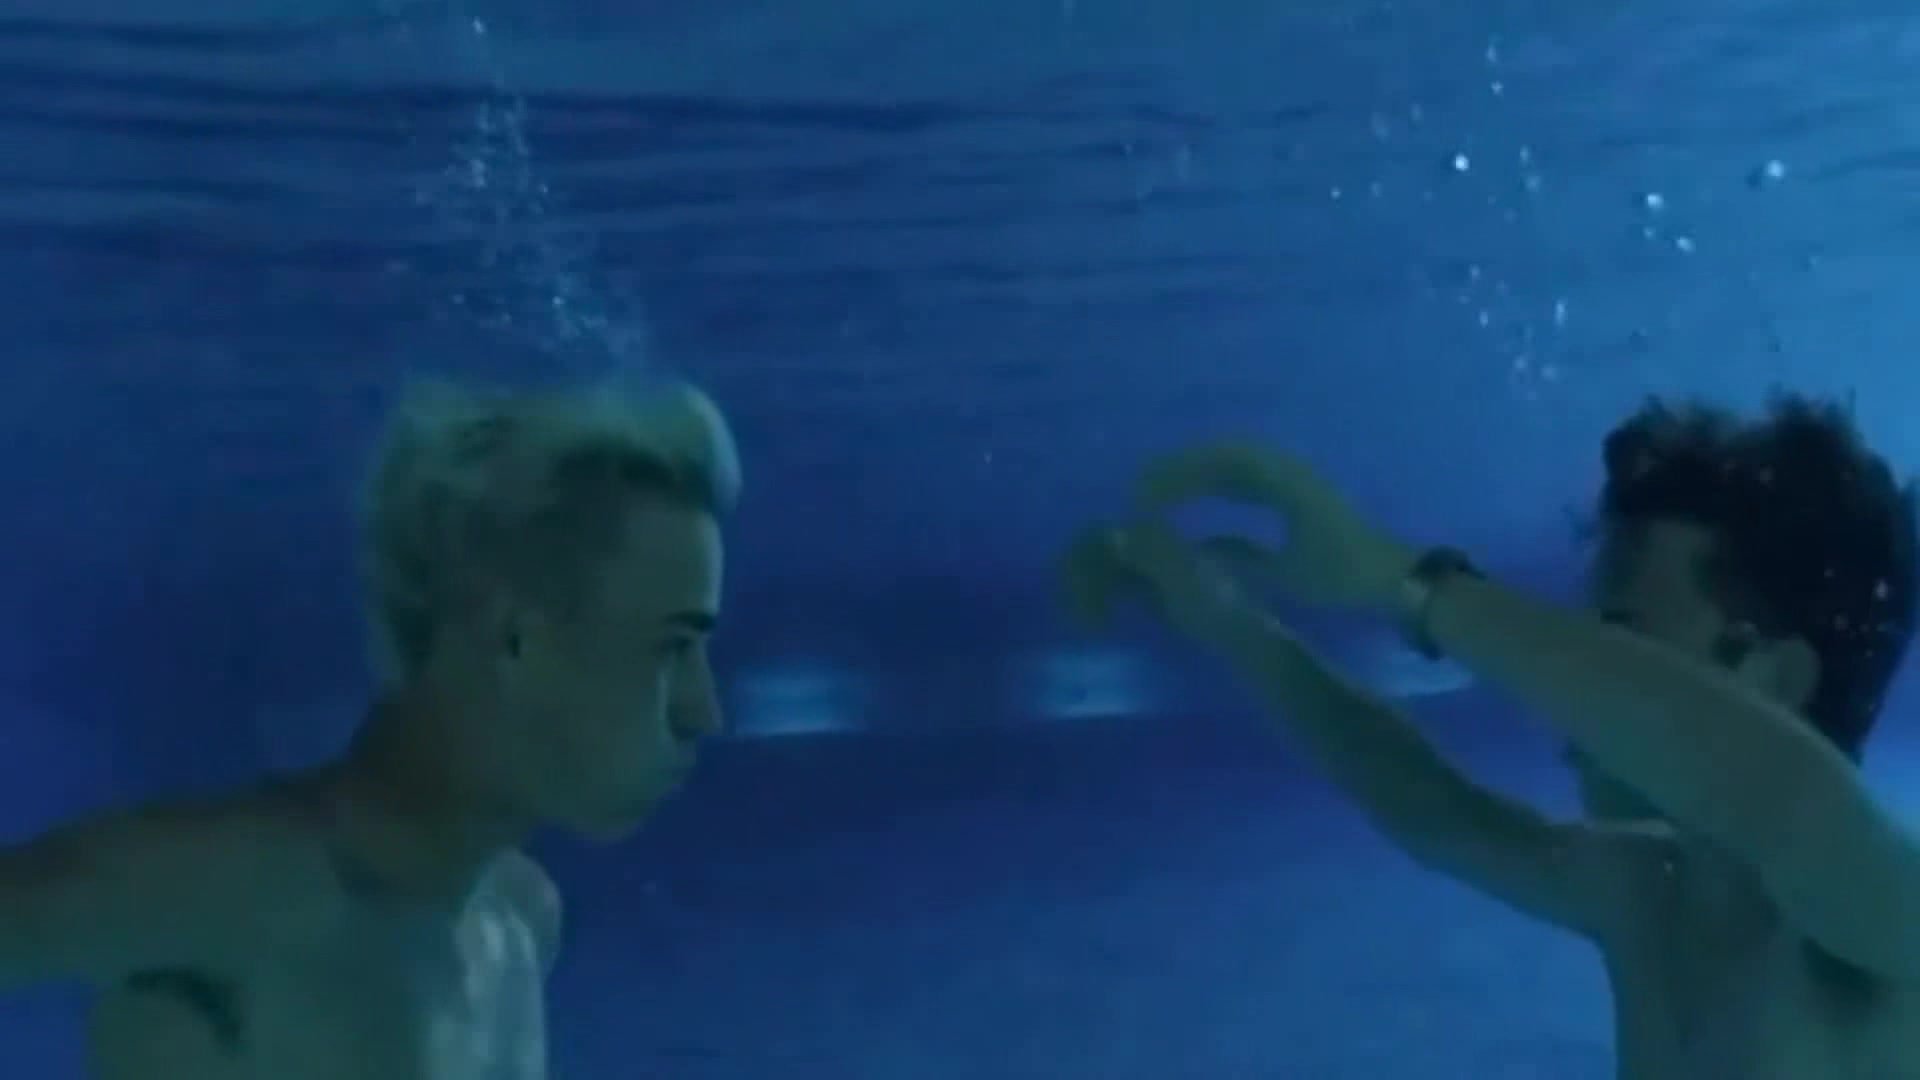 Gay buddies kissing barefaced underwater